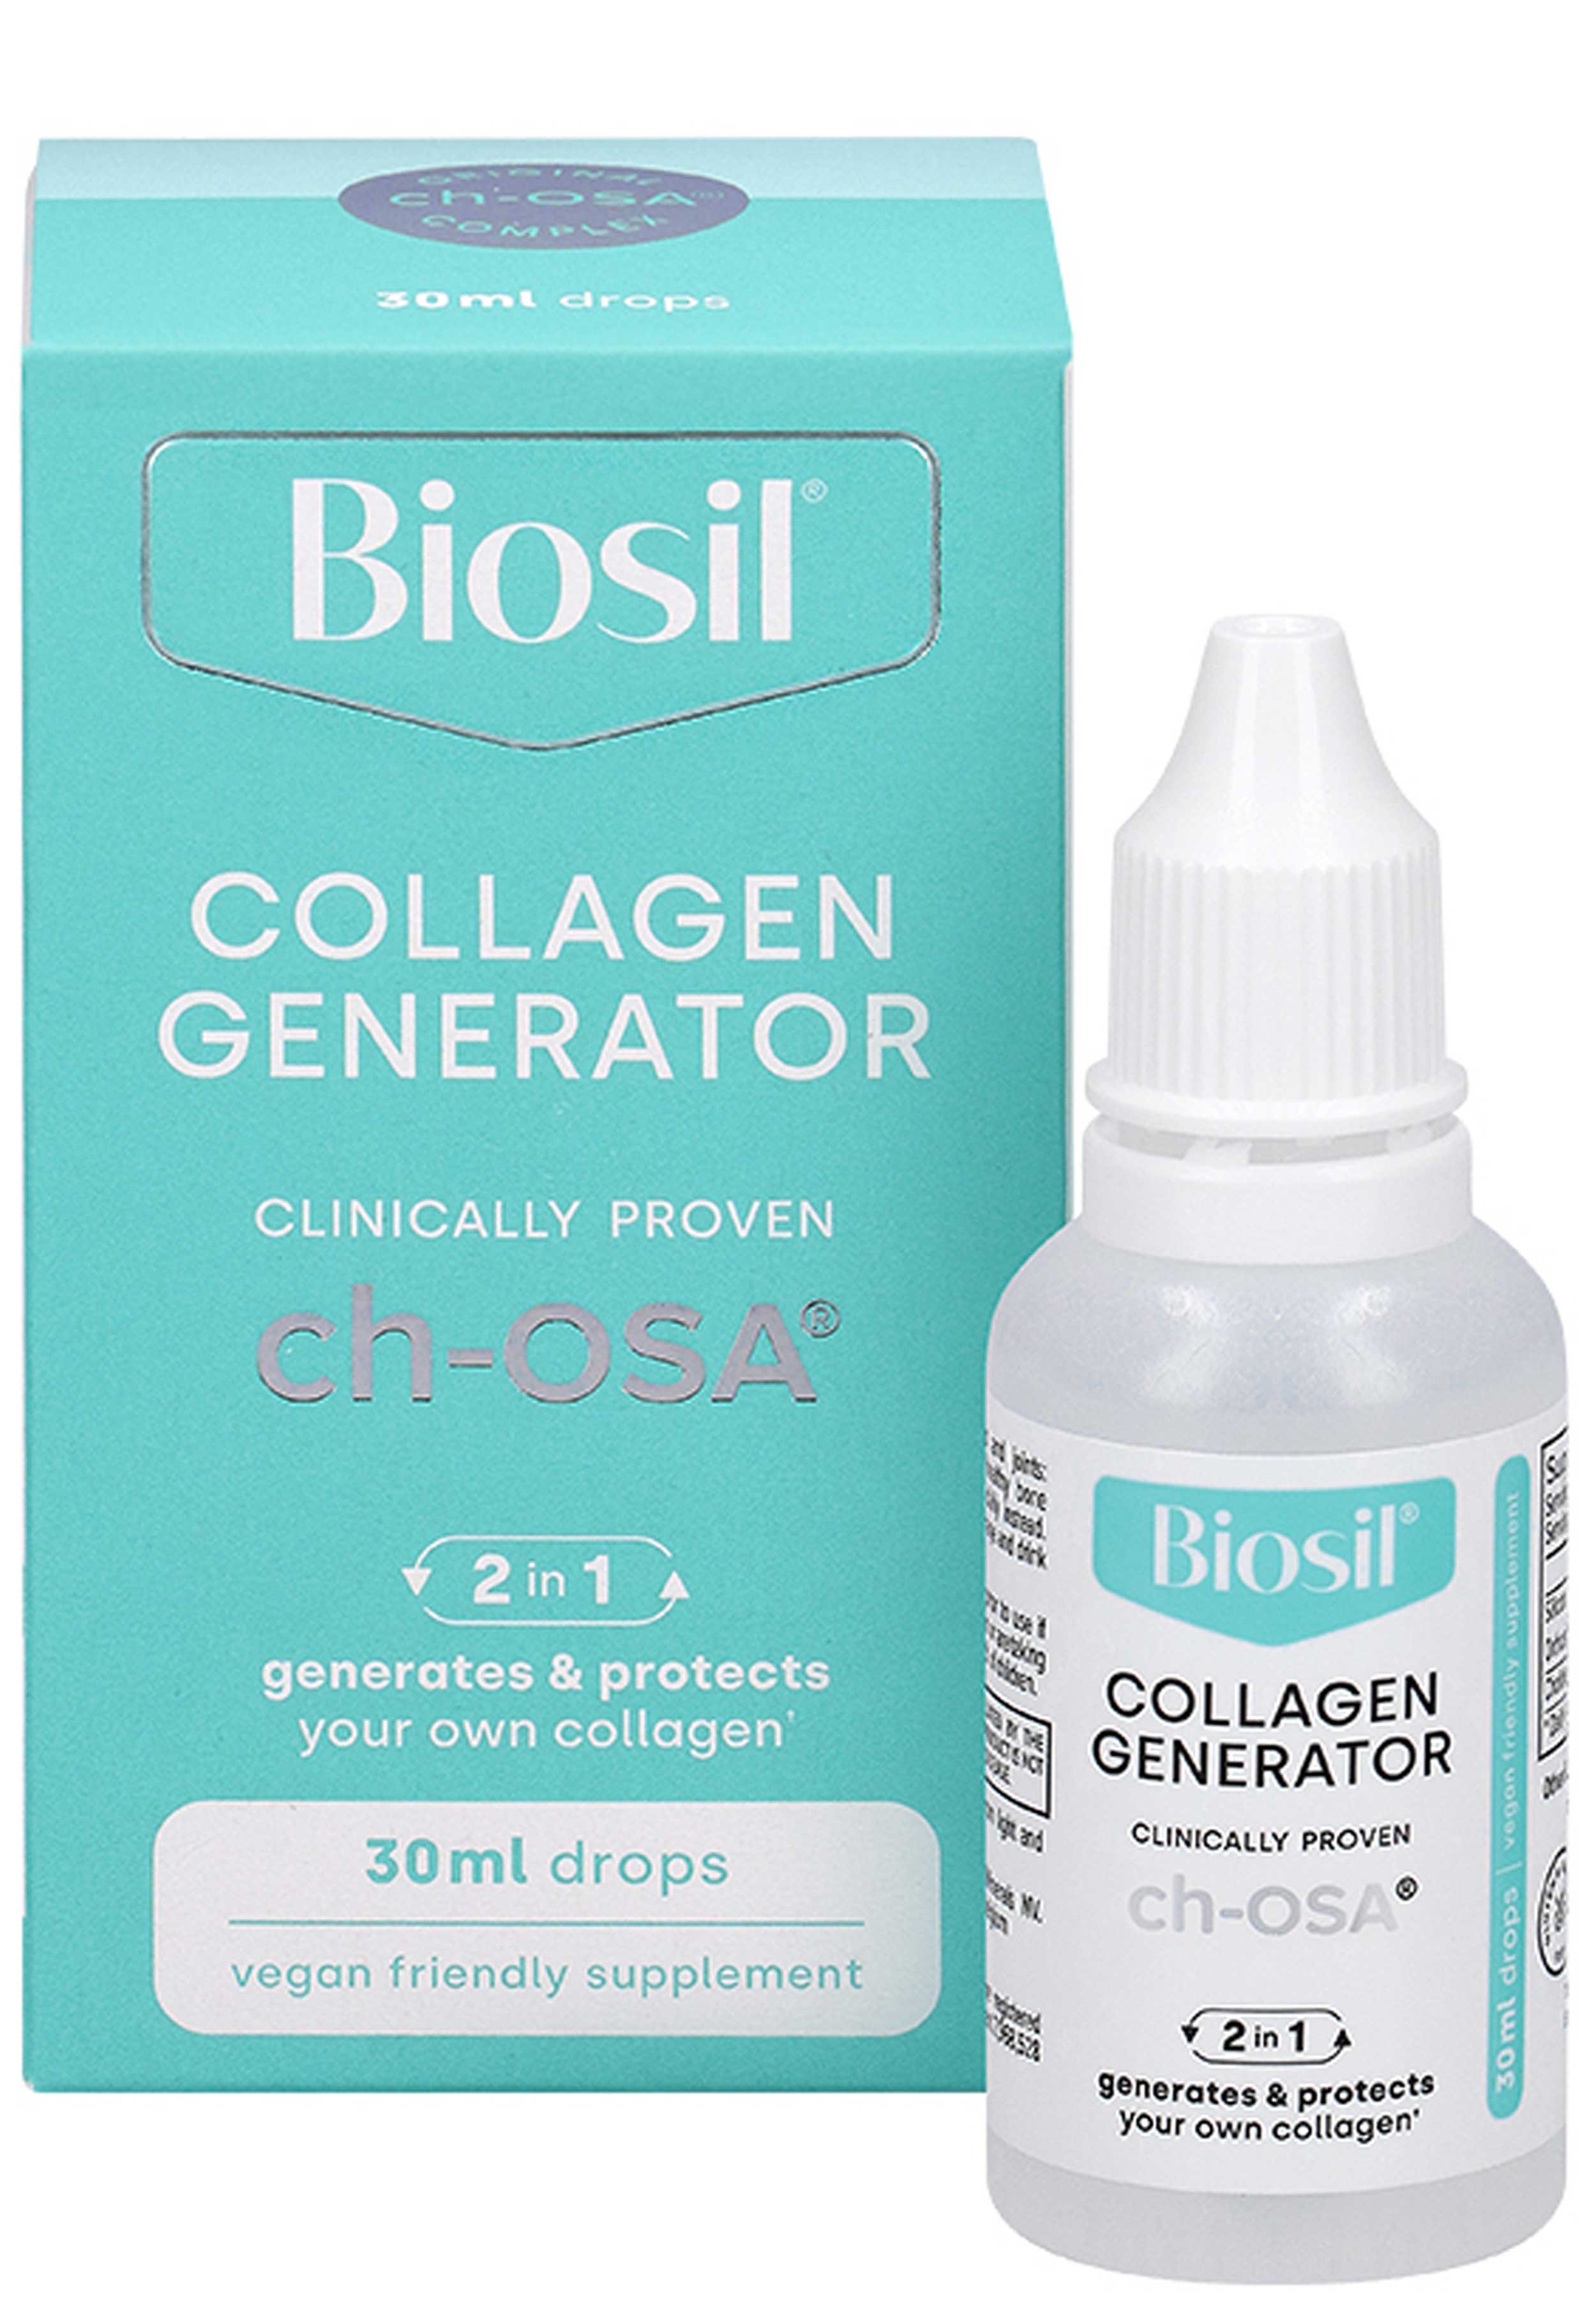 Natural Factors Biosil Collagen Generator (Formerly BioSil Beauty, Bones, Joints)